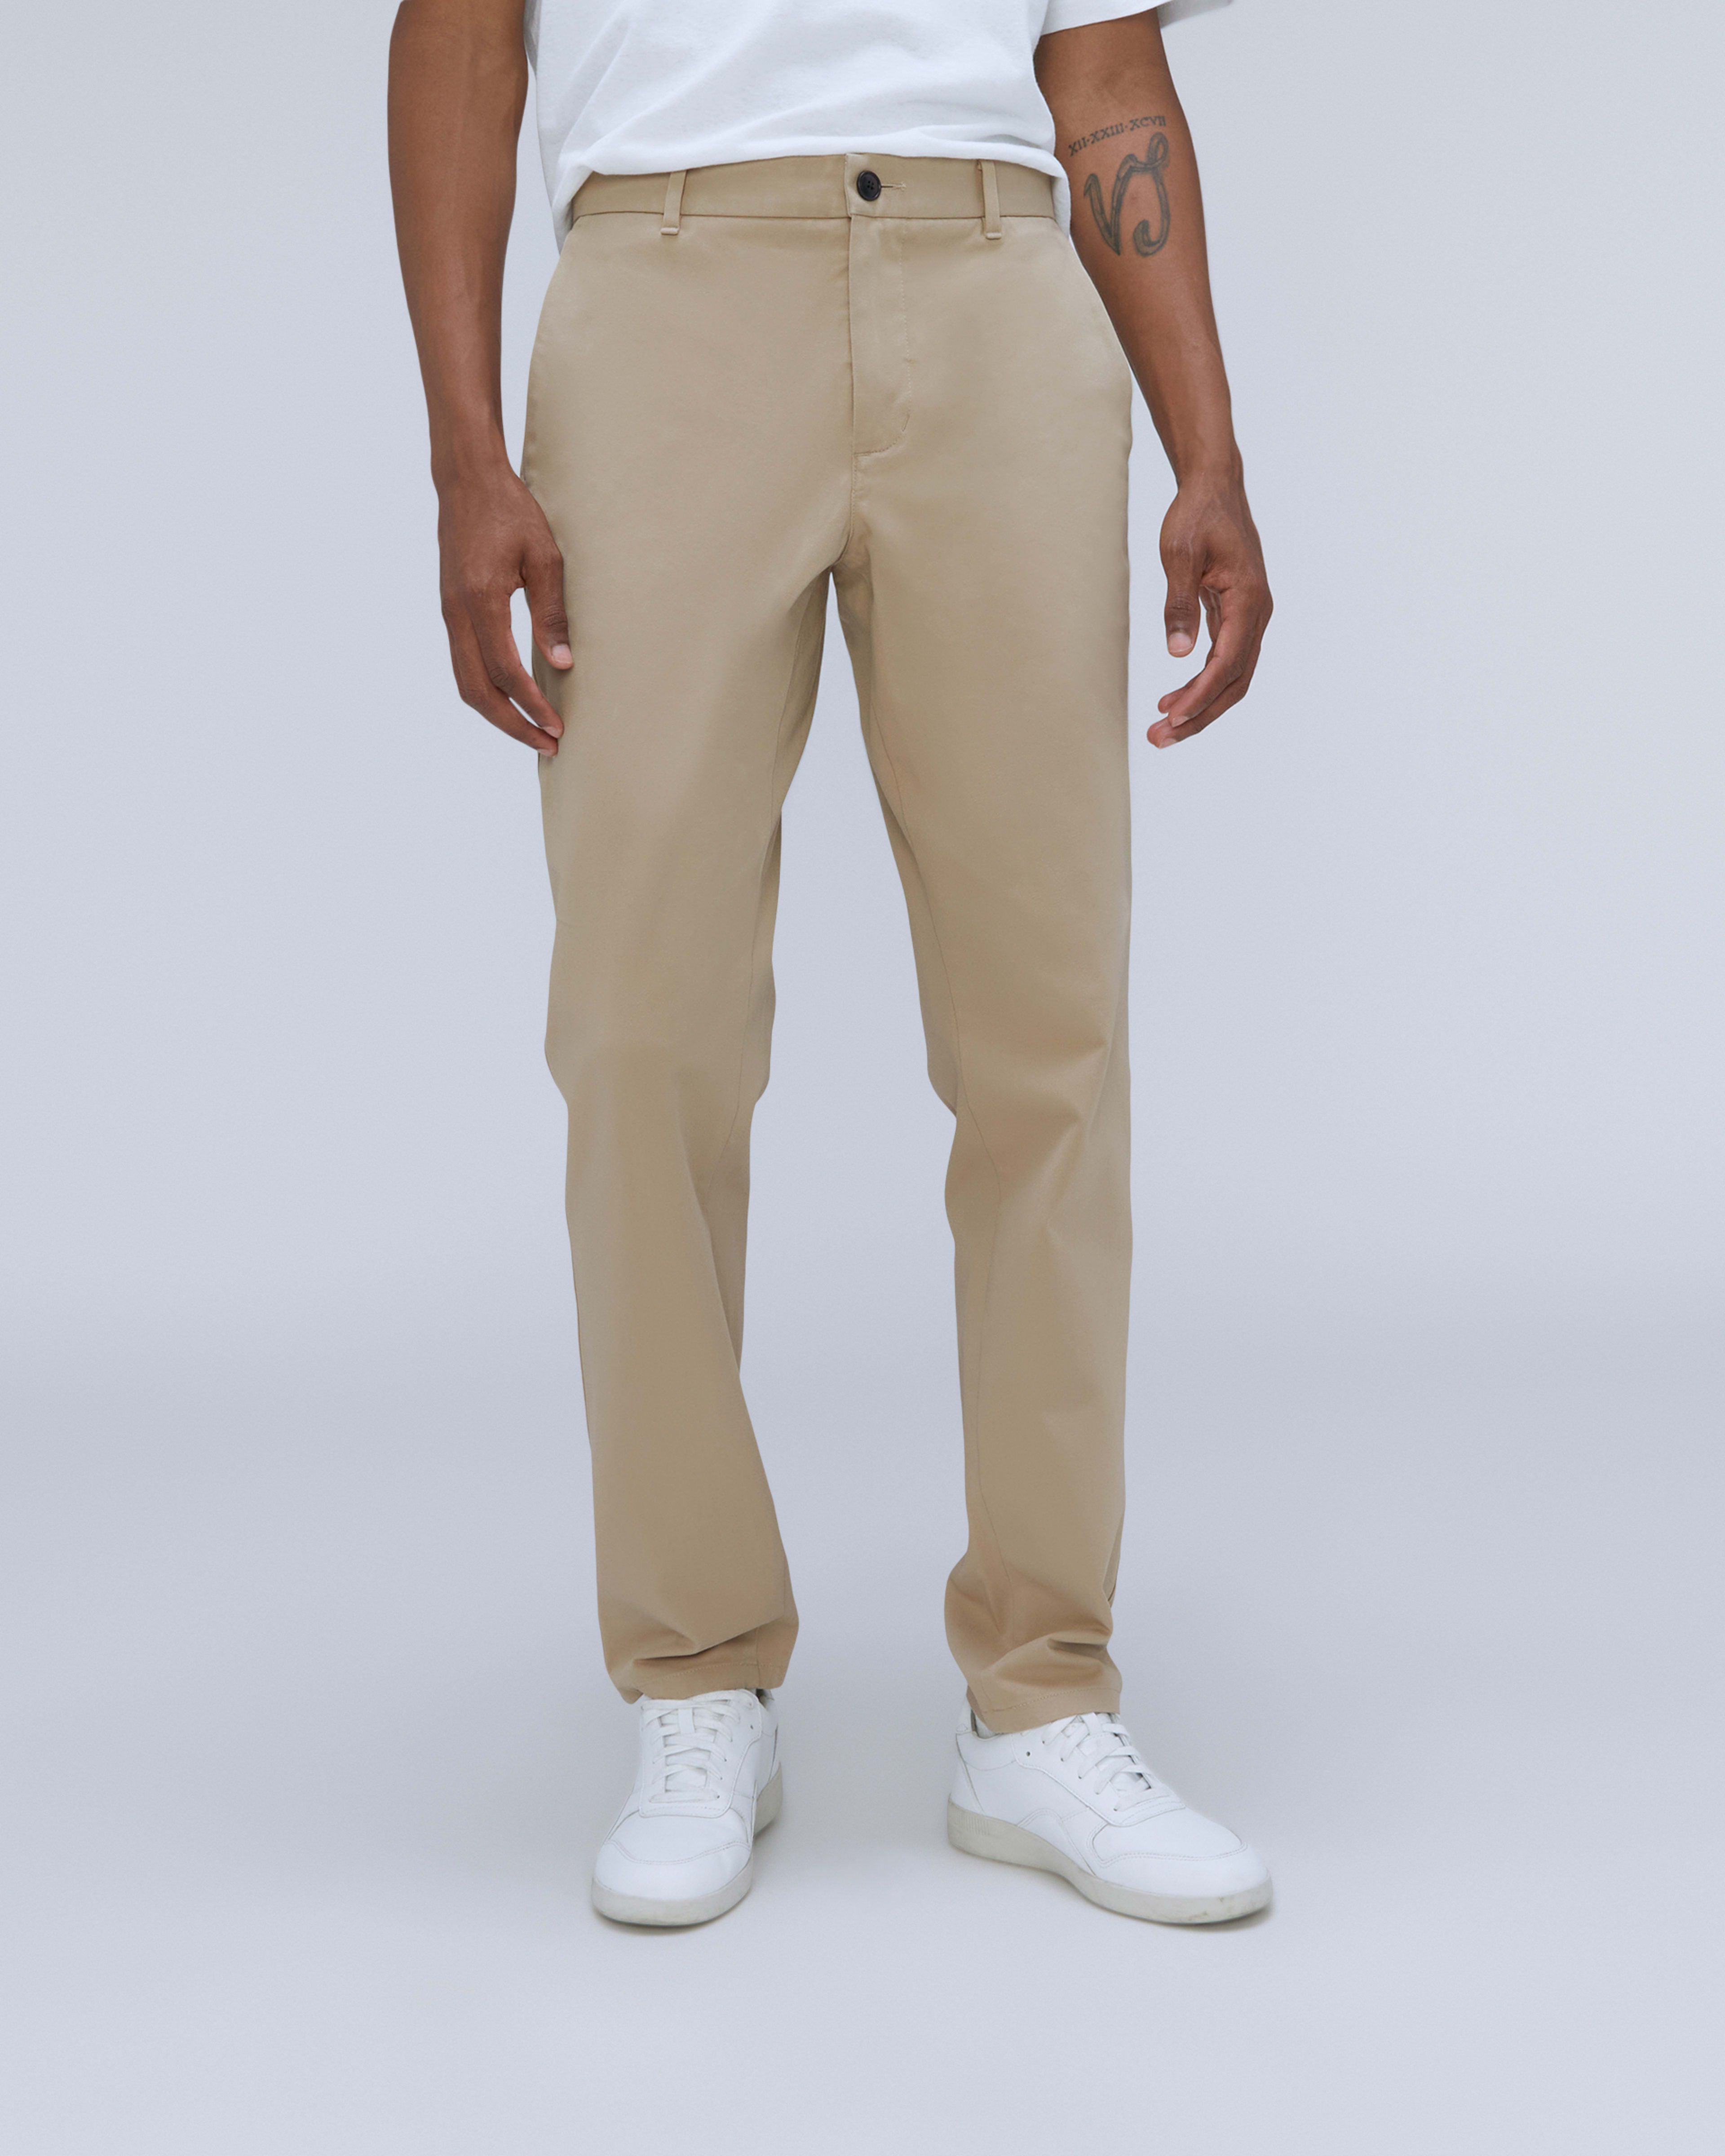 Mens Trouser Shopping  Buy Mens Trousers Online  G3 fashion